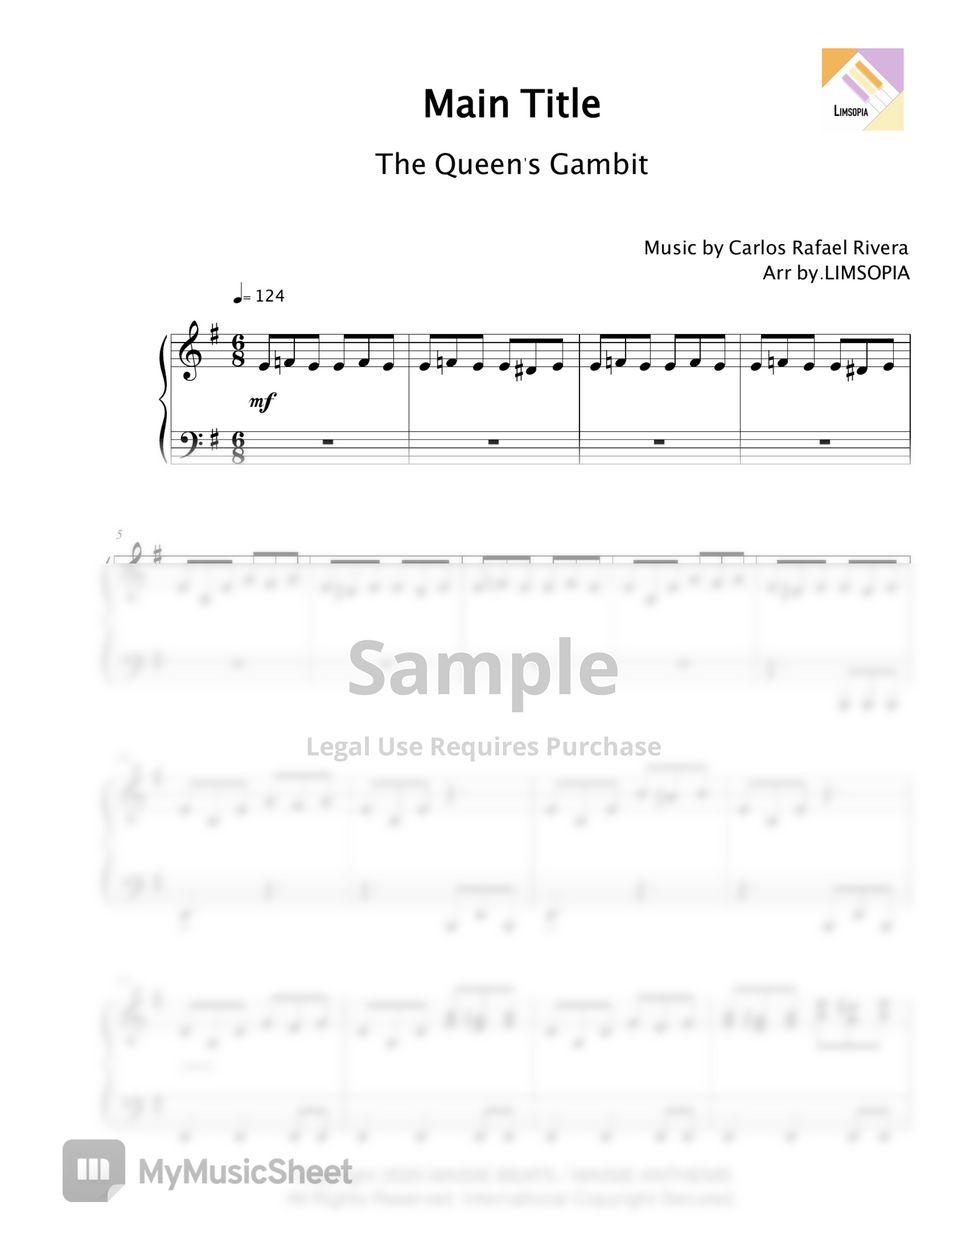 Carlos Rafael Rivera - (The Queen's Gambit OST)Main Title by LIMSOPIA